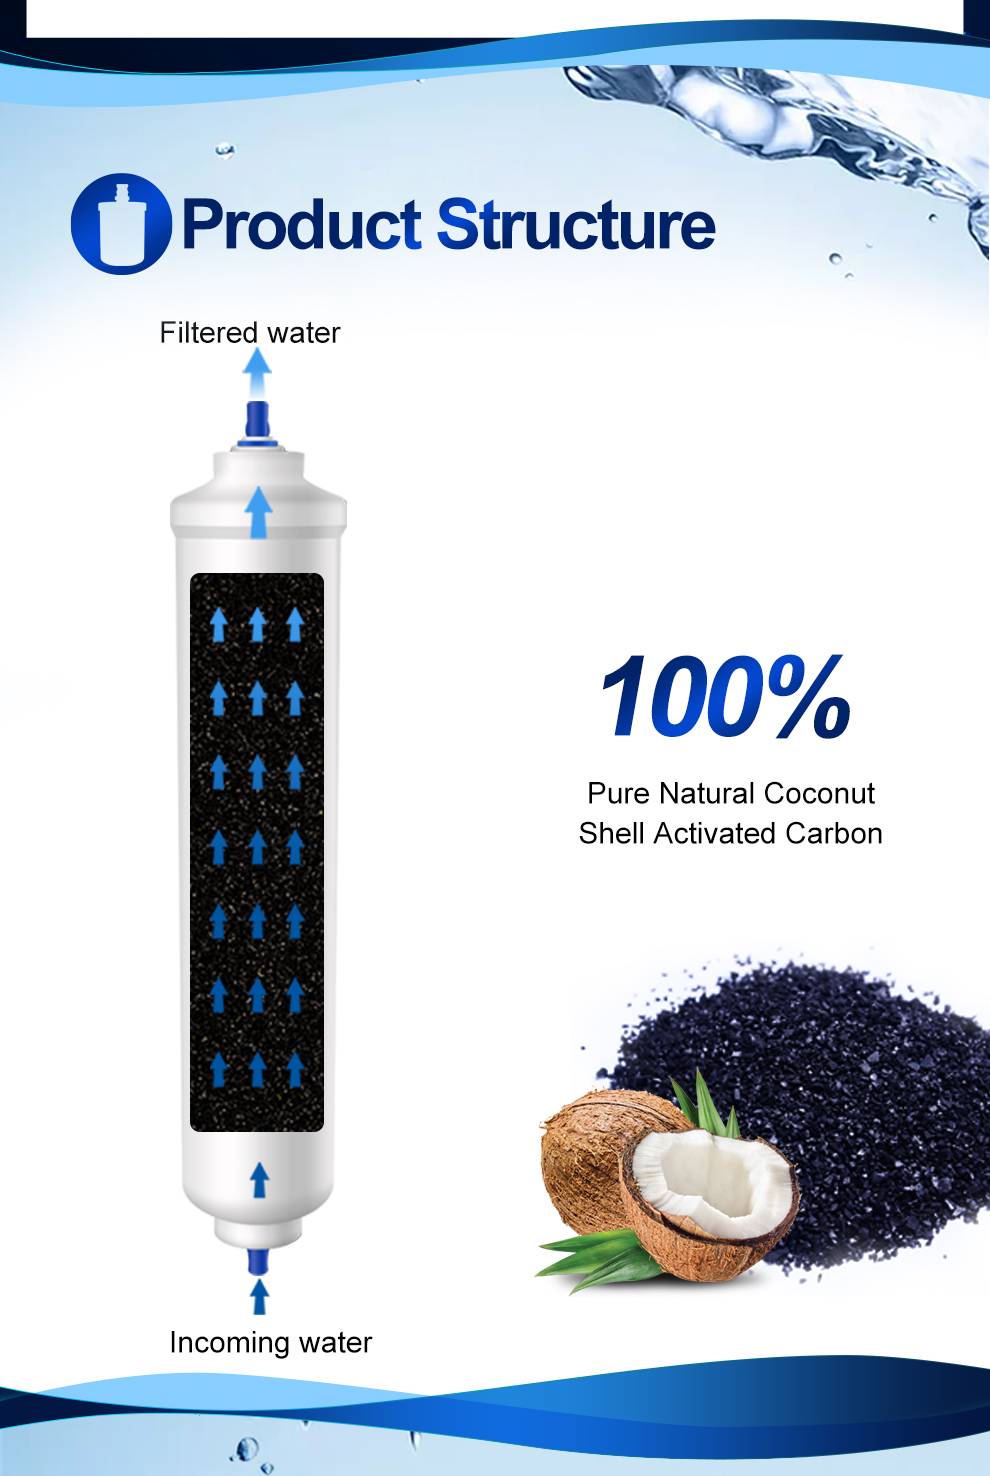 Samsung Refrigerator Water Filter DA29-10105J